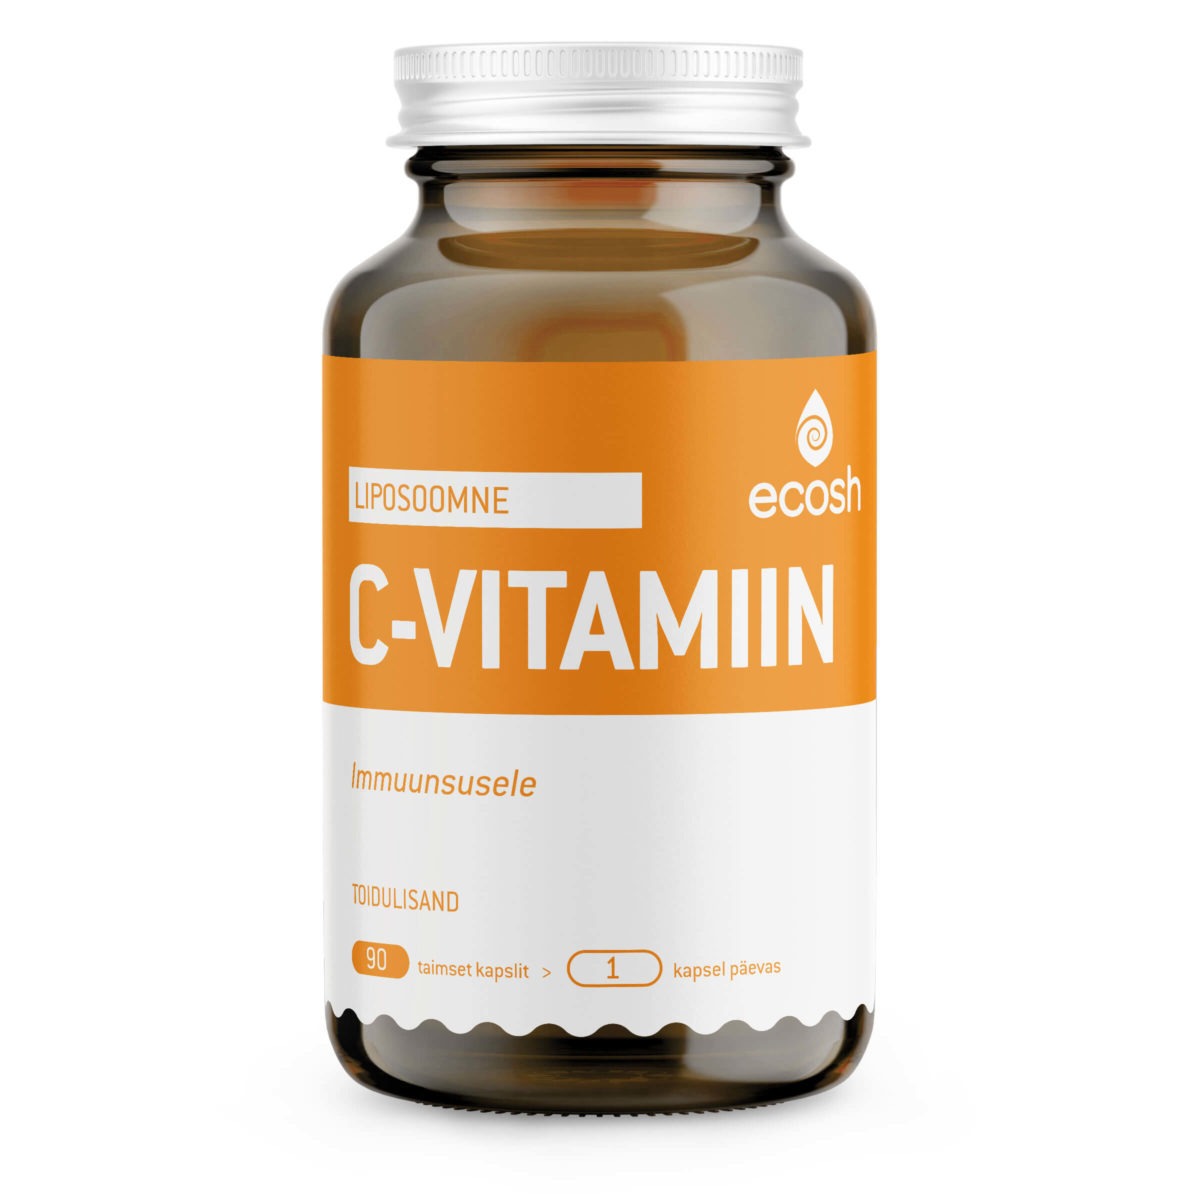 Ecosh liposoomne C-vitamiin, 90 kapslit